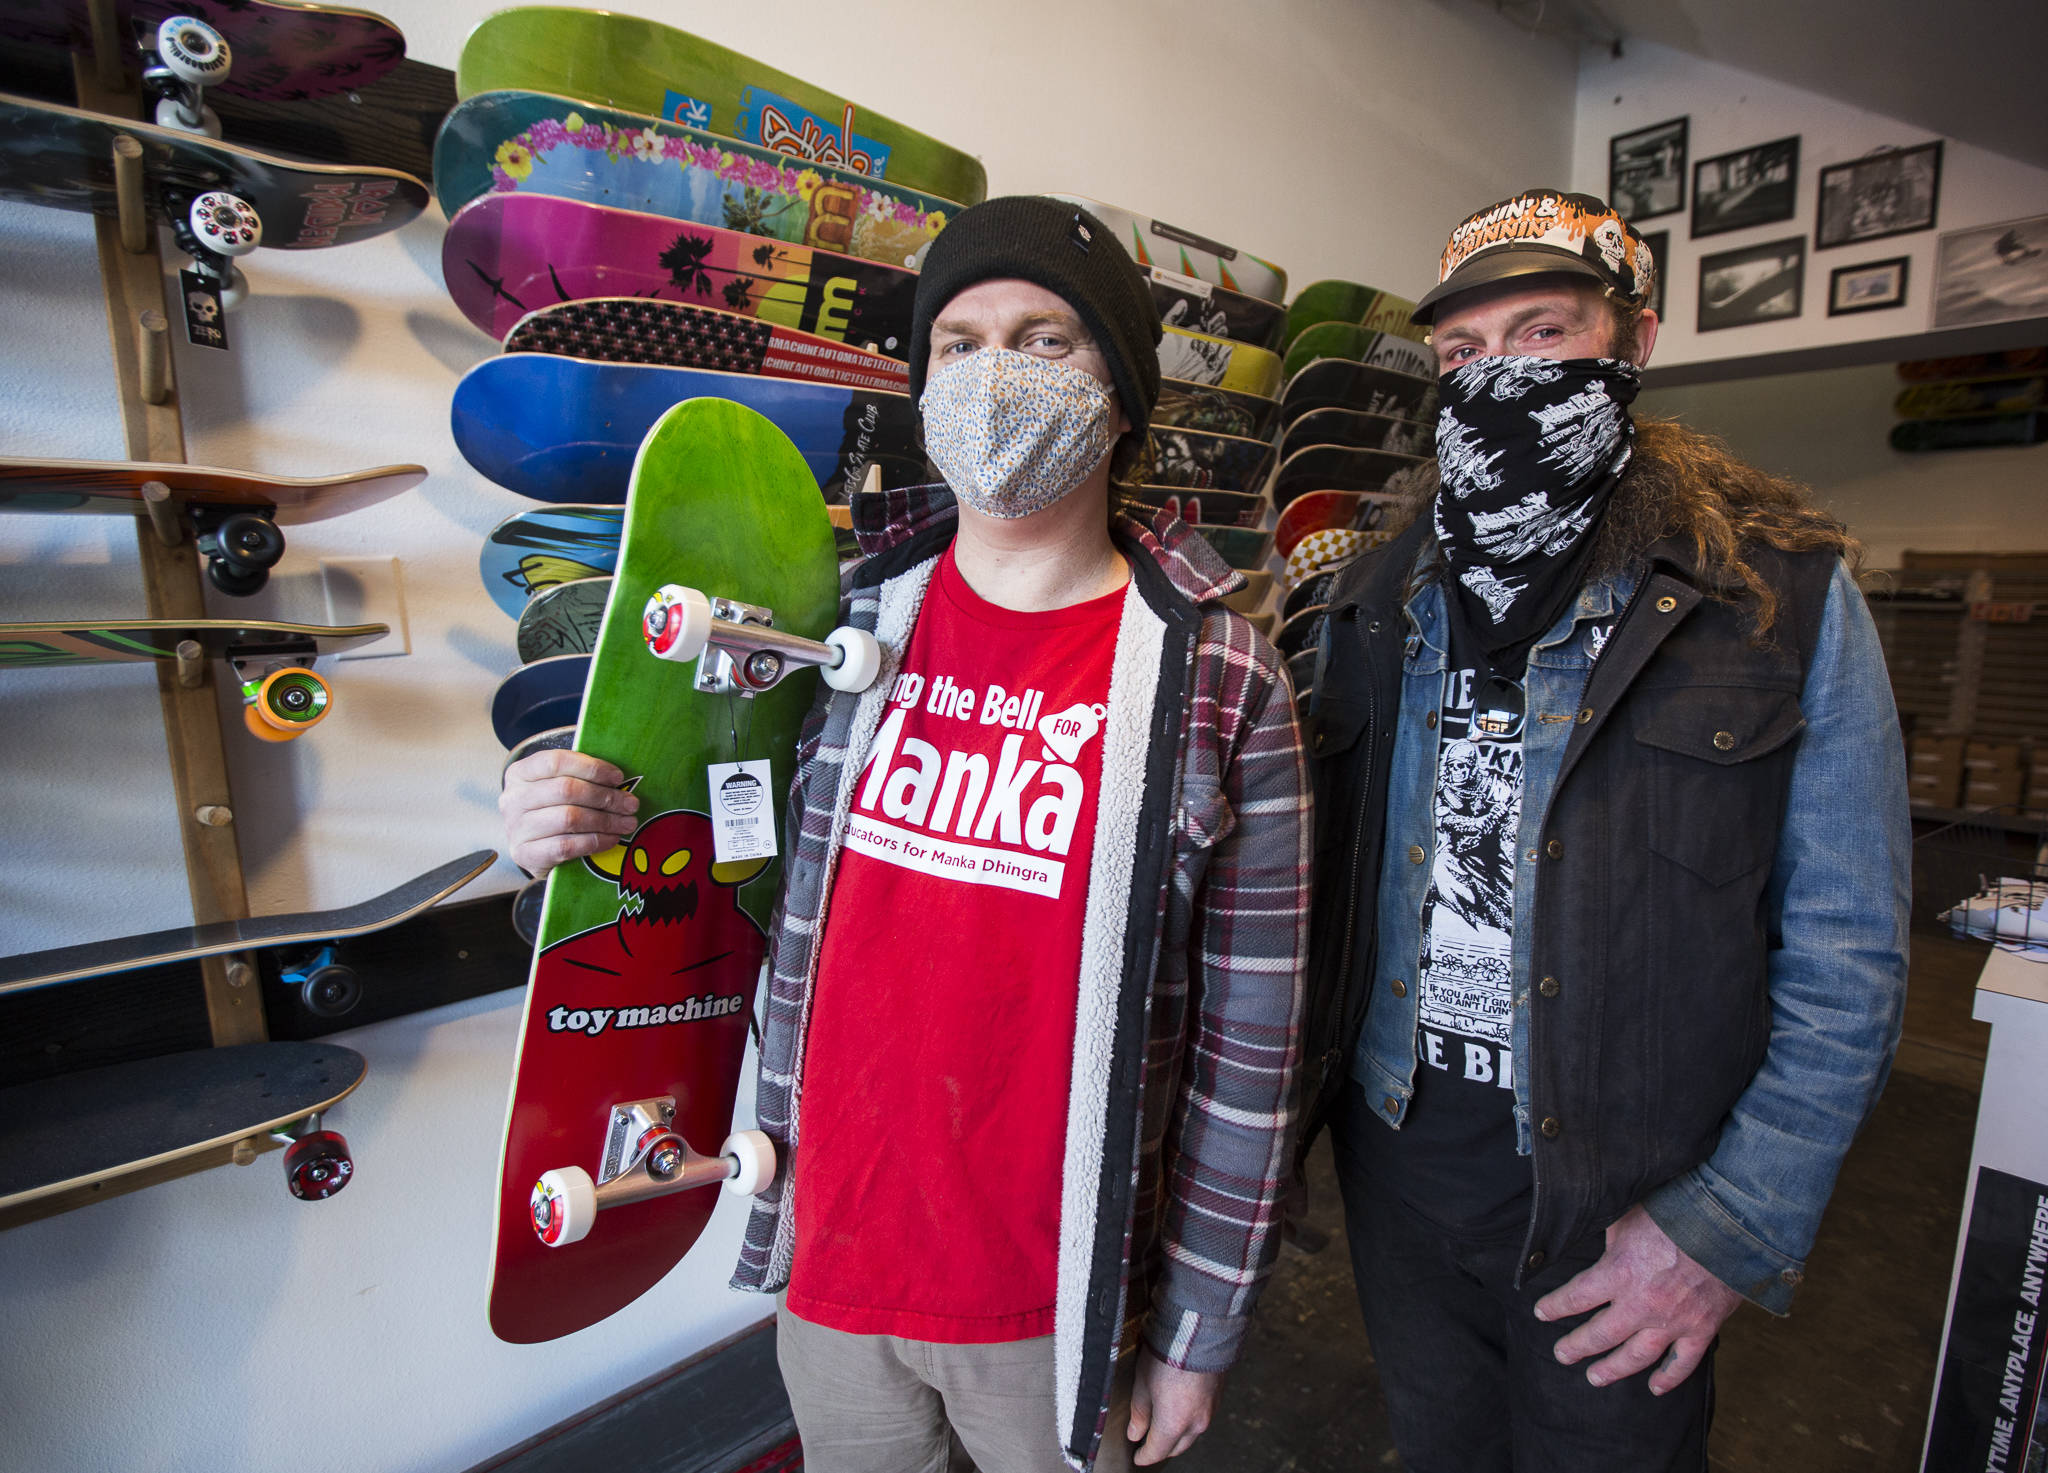 Buigen Chemicaliën Noord West This new skateboard store in downtown Everett really 'pops' | HeraldNet.com